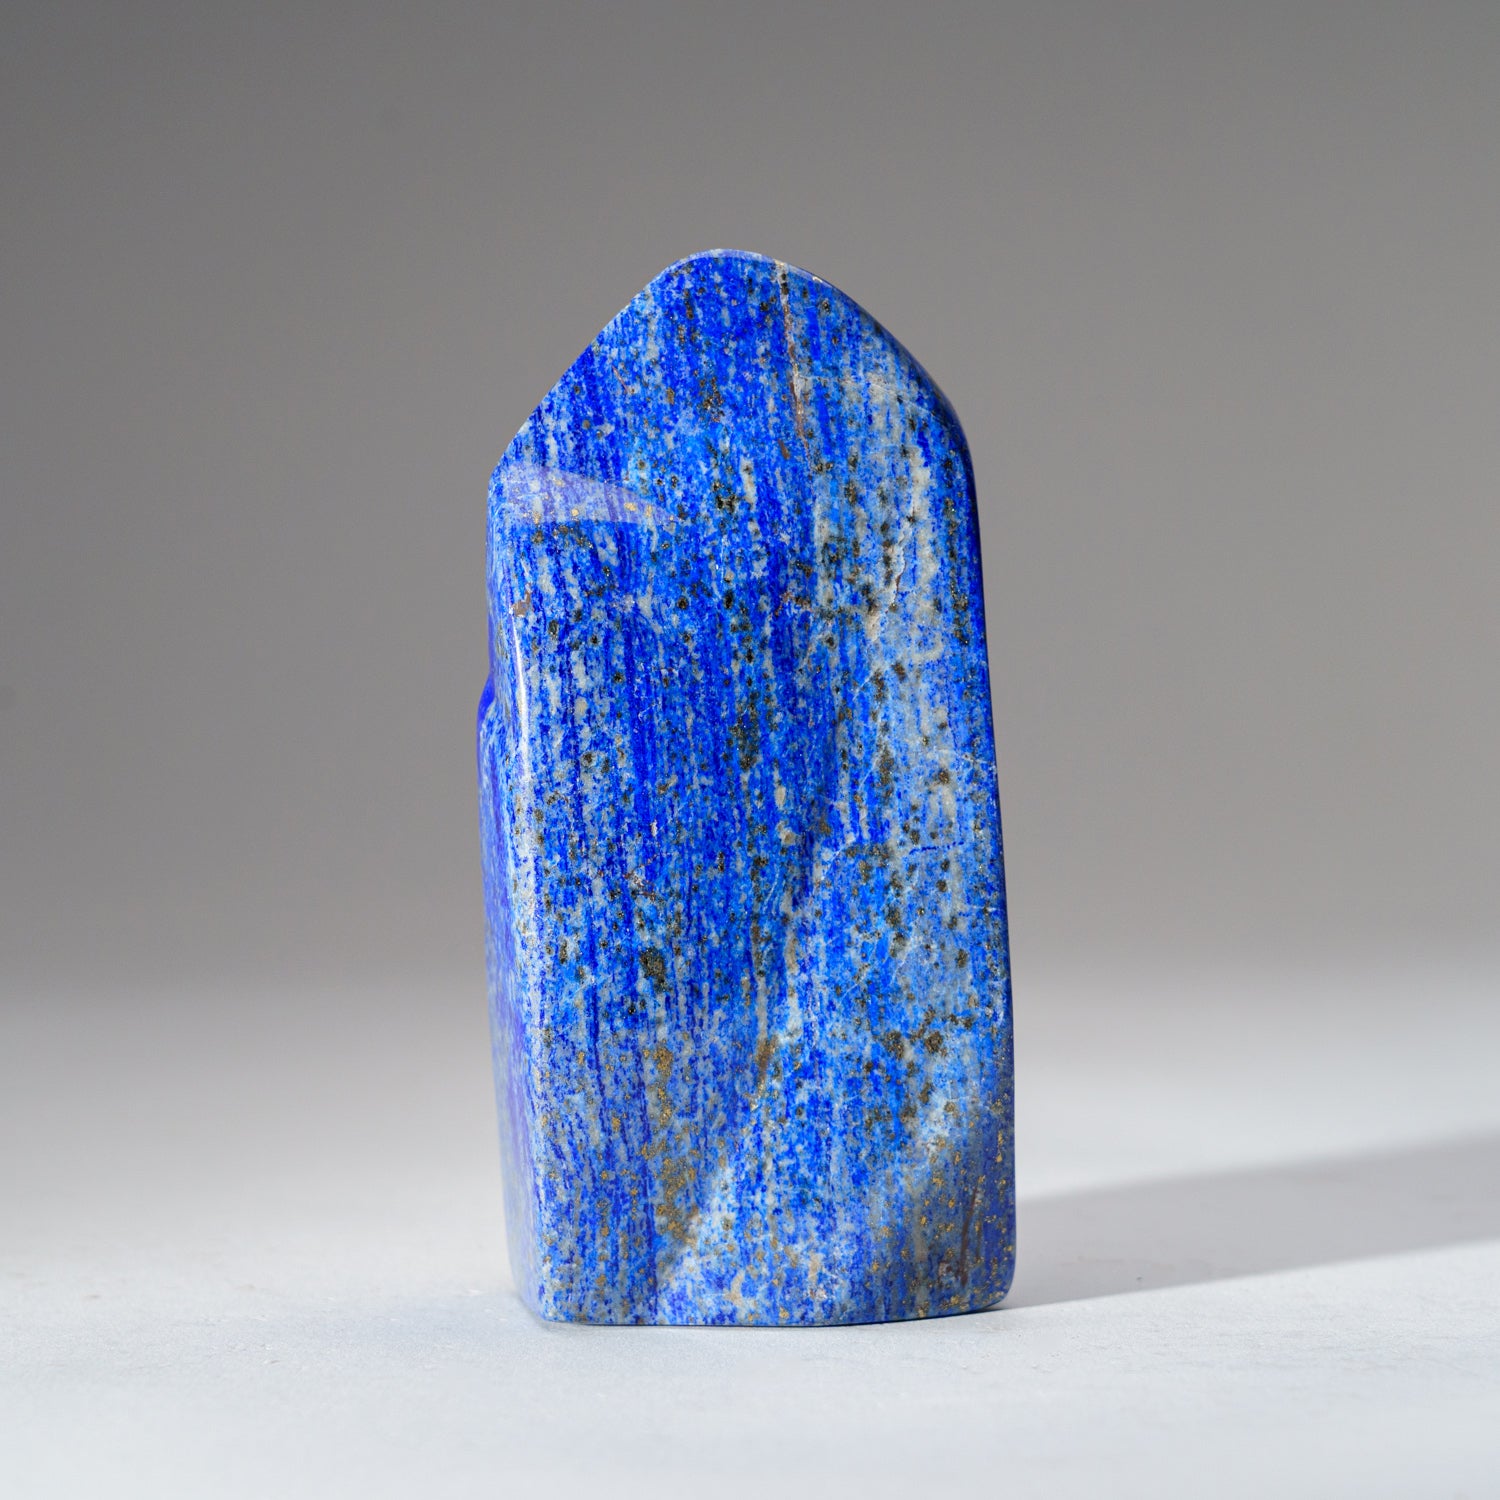 Polished Lapis Lazuli Freeform from Afghanistan (2 lbs)